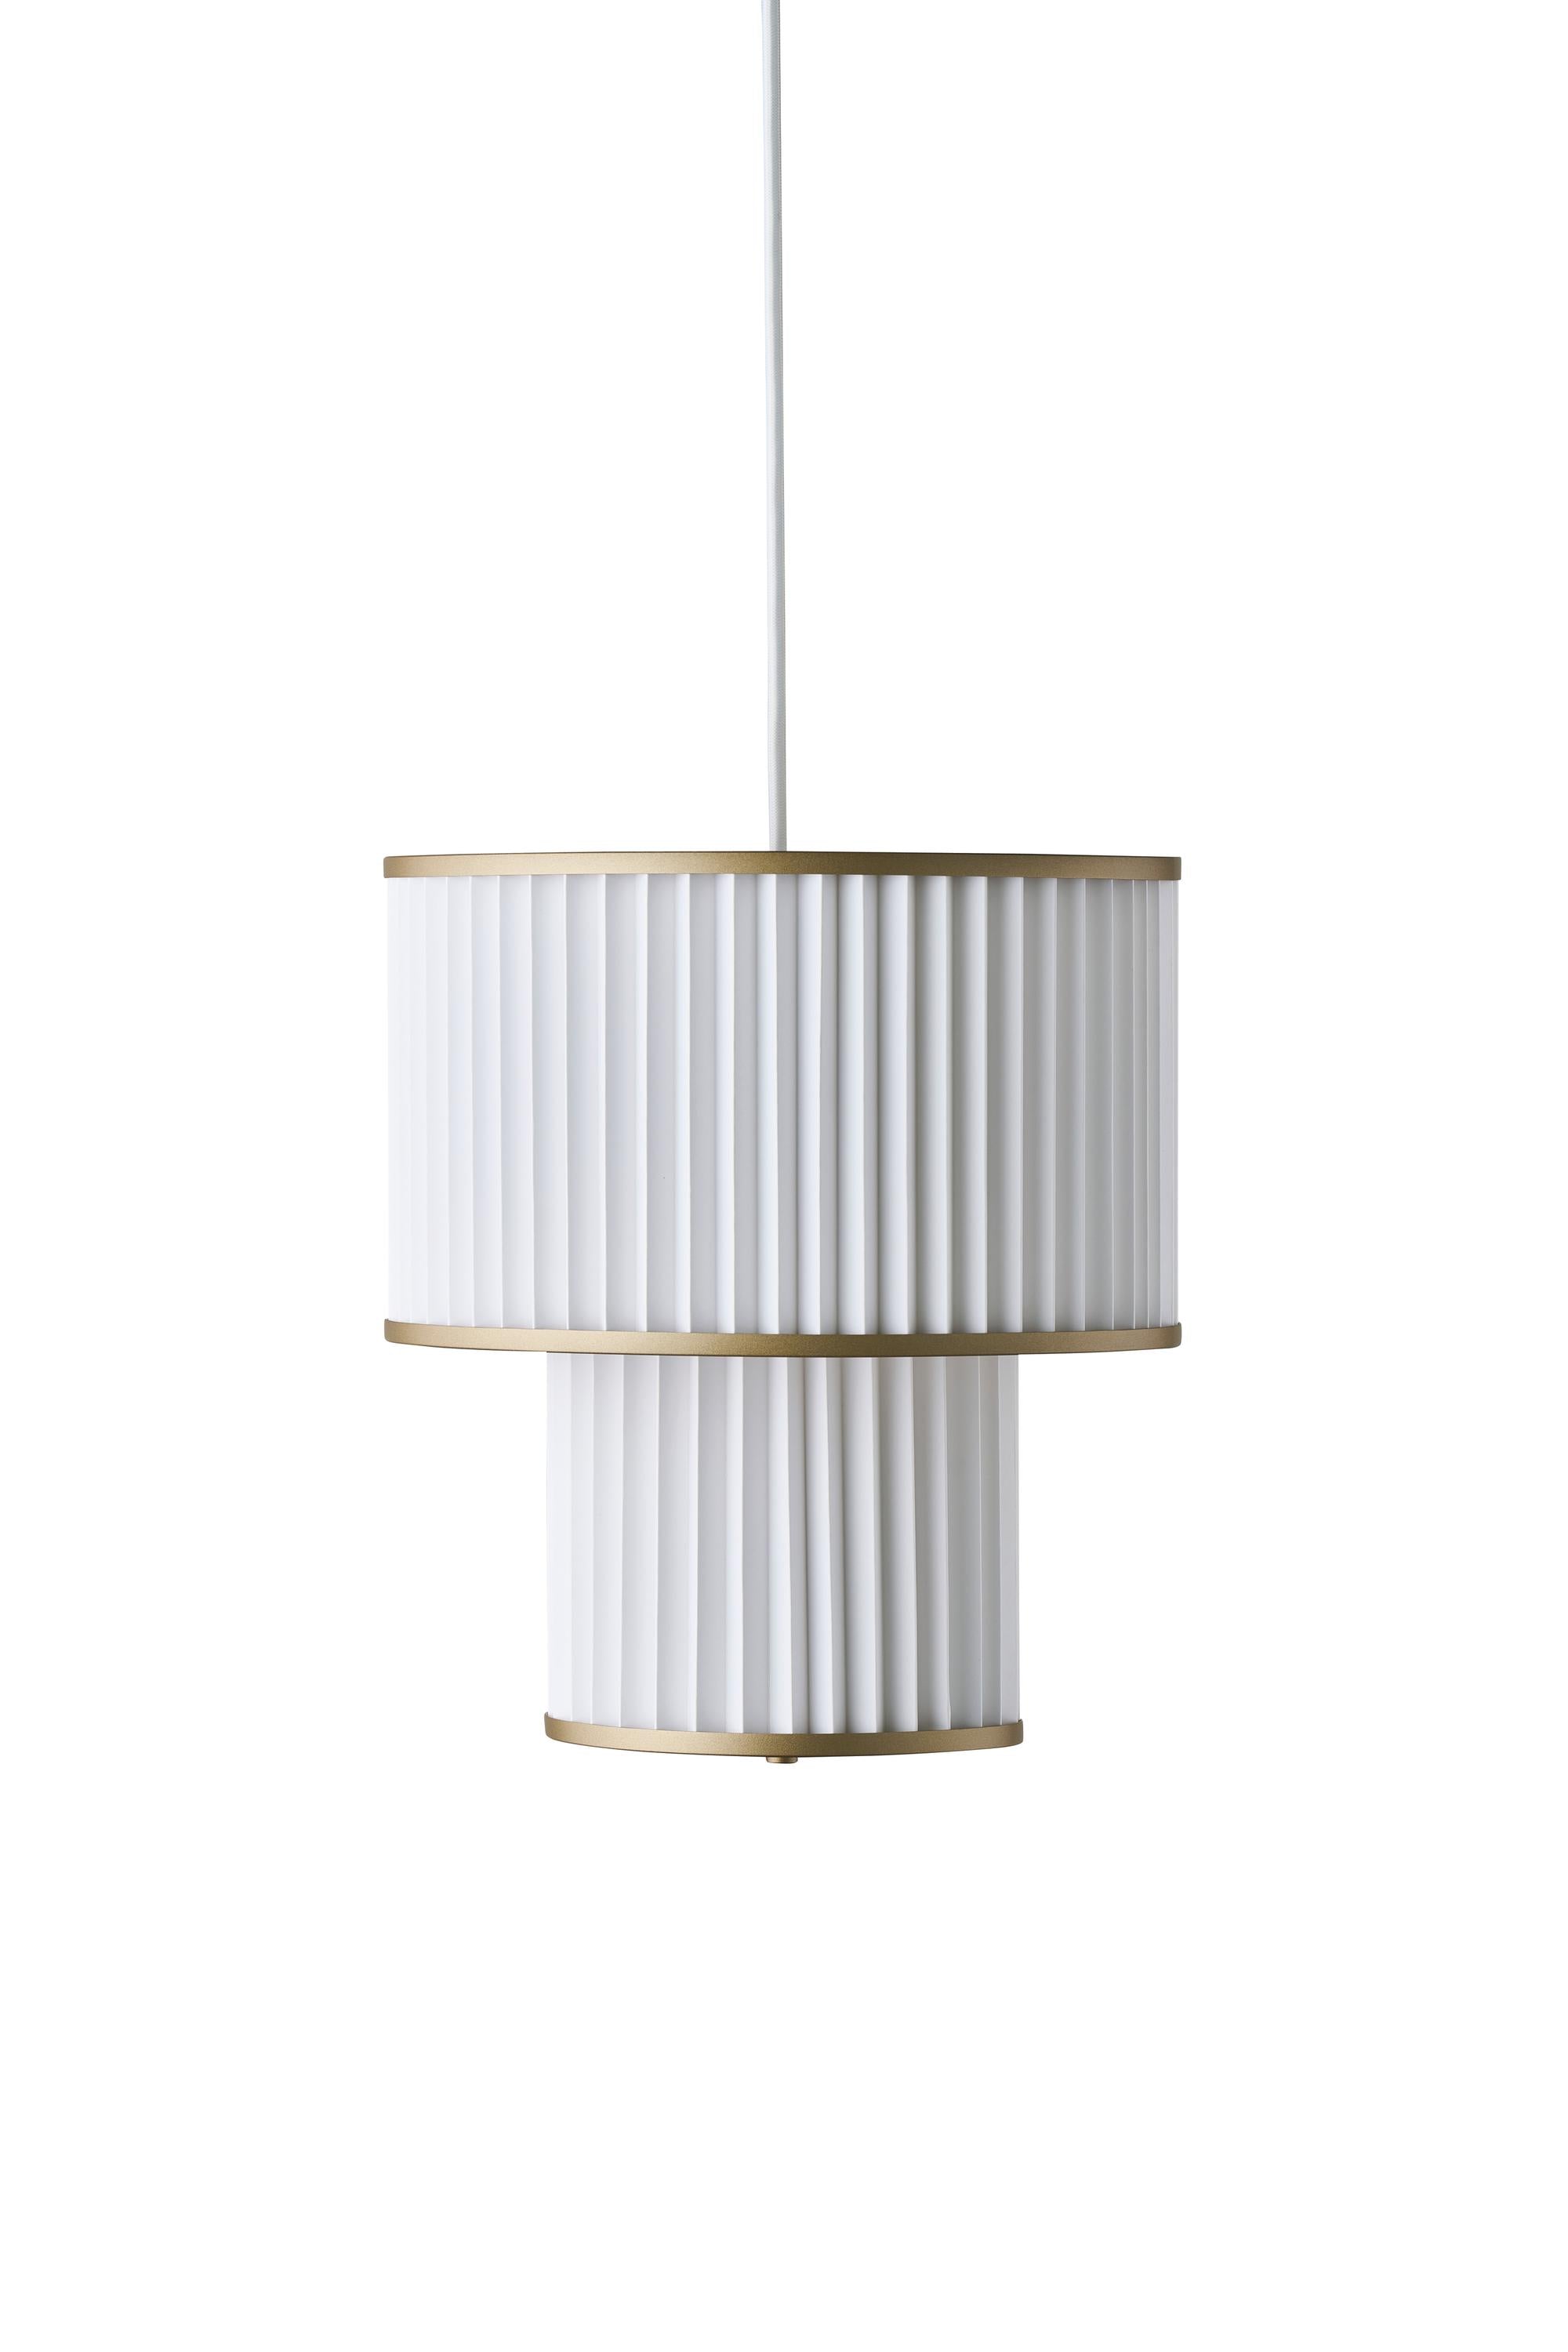 Le Klint Plivello Suspension Lamp Golden/White med 2 nyanser (S M)